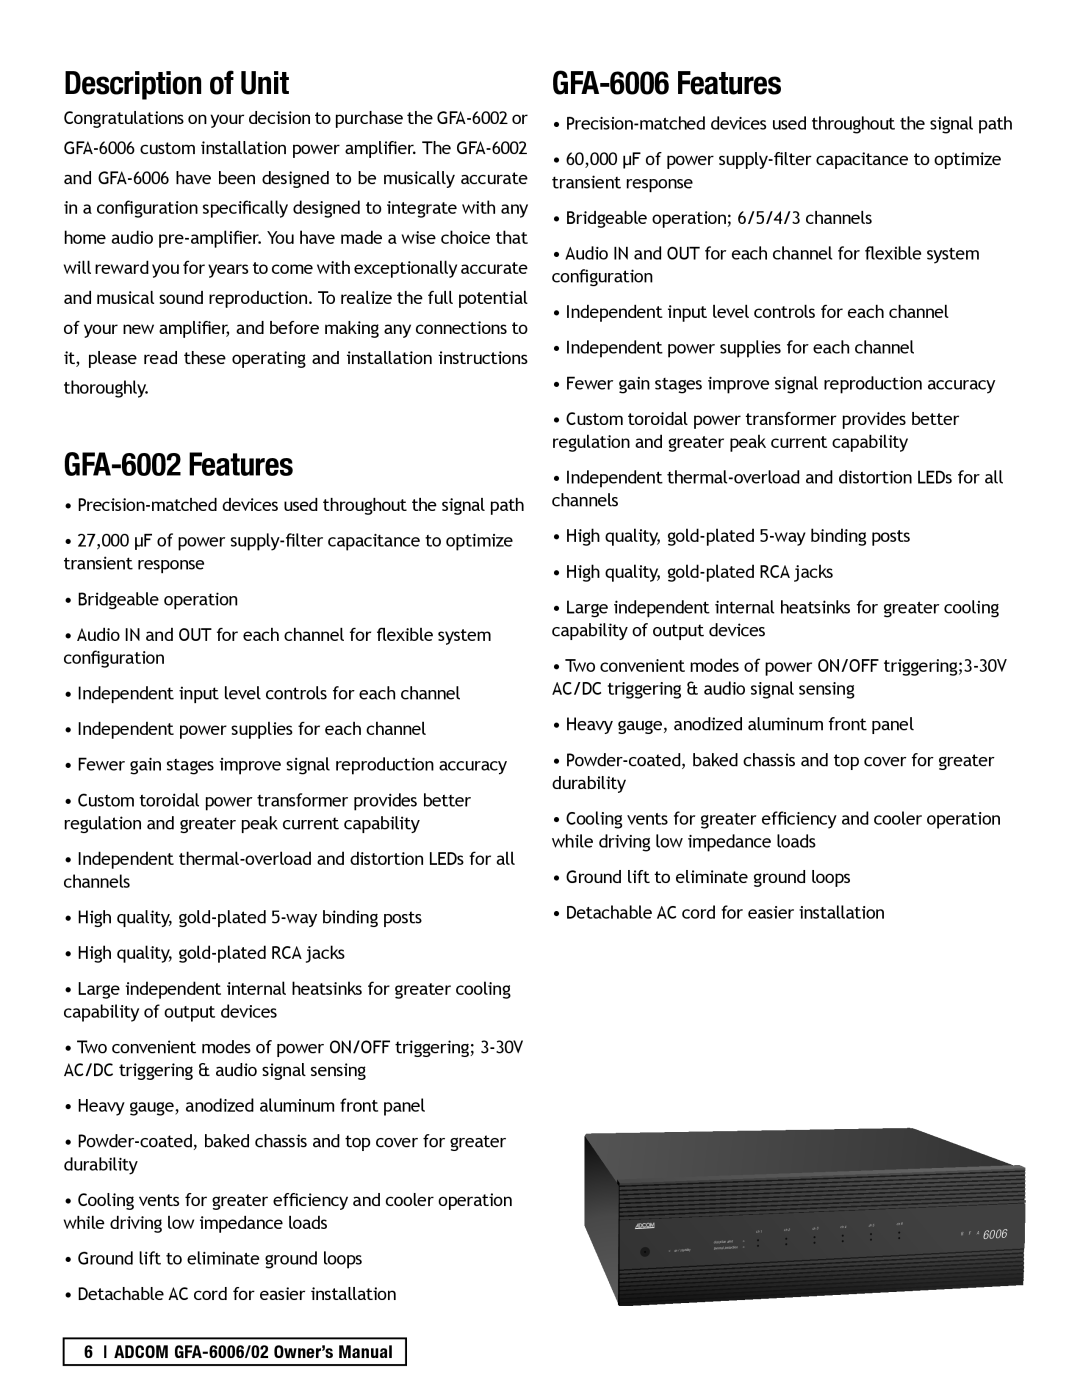 Adcom owner manual Description of Unit, GFA-6002 Features, GFA-6006 Features 